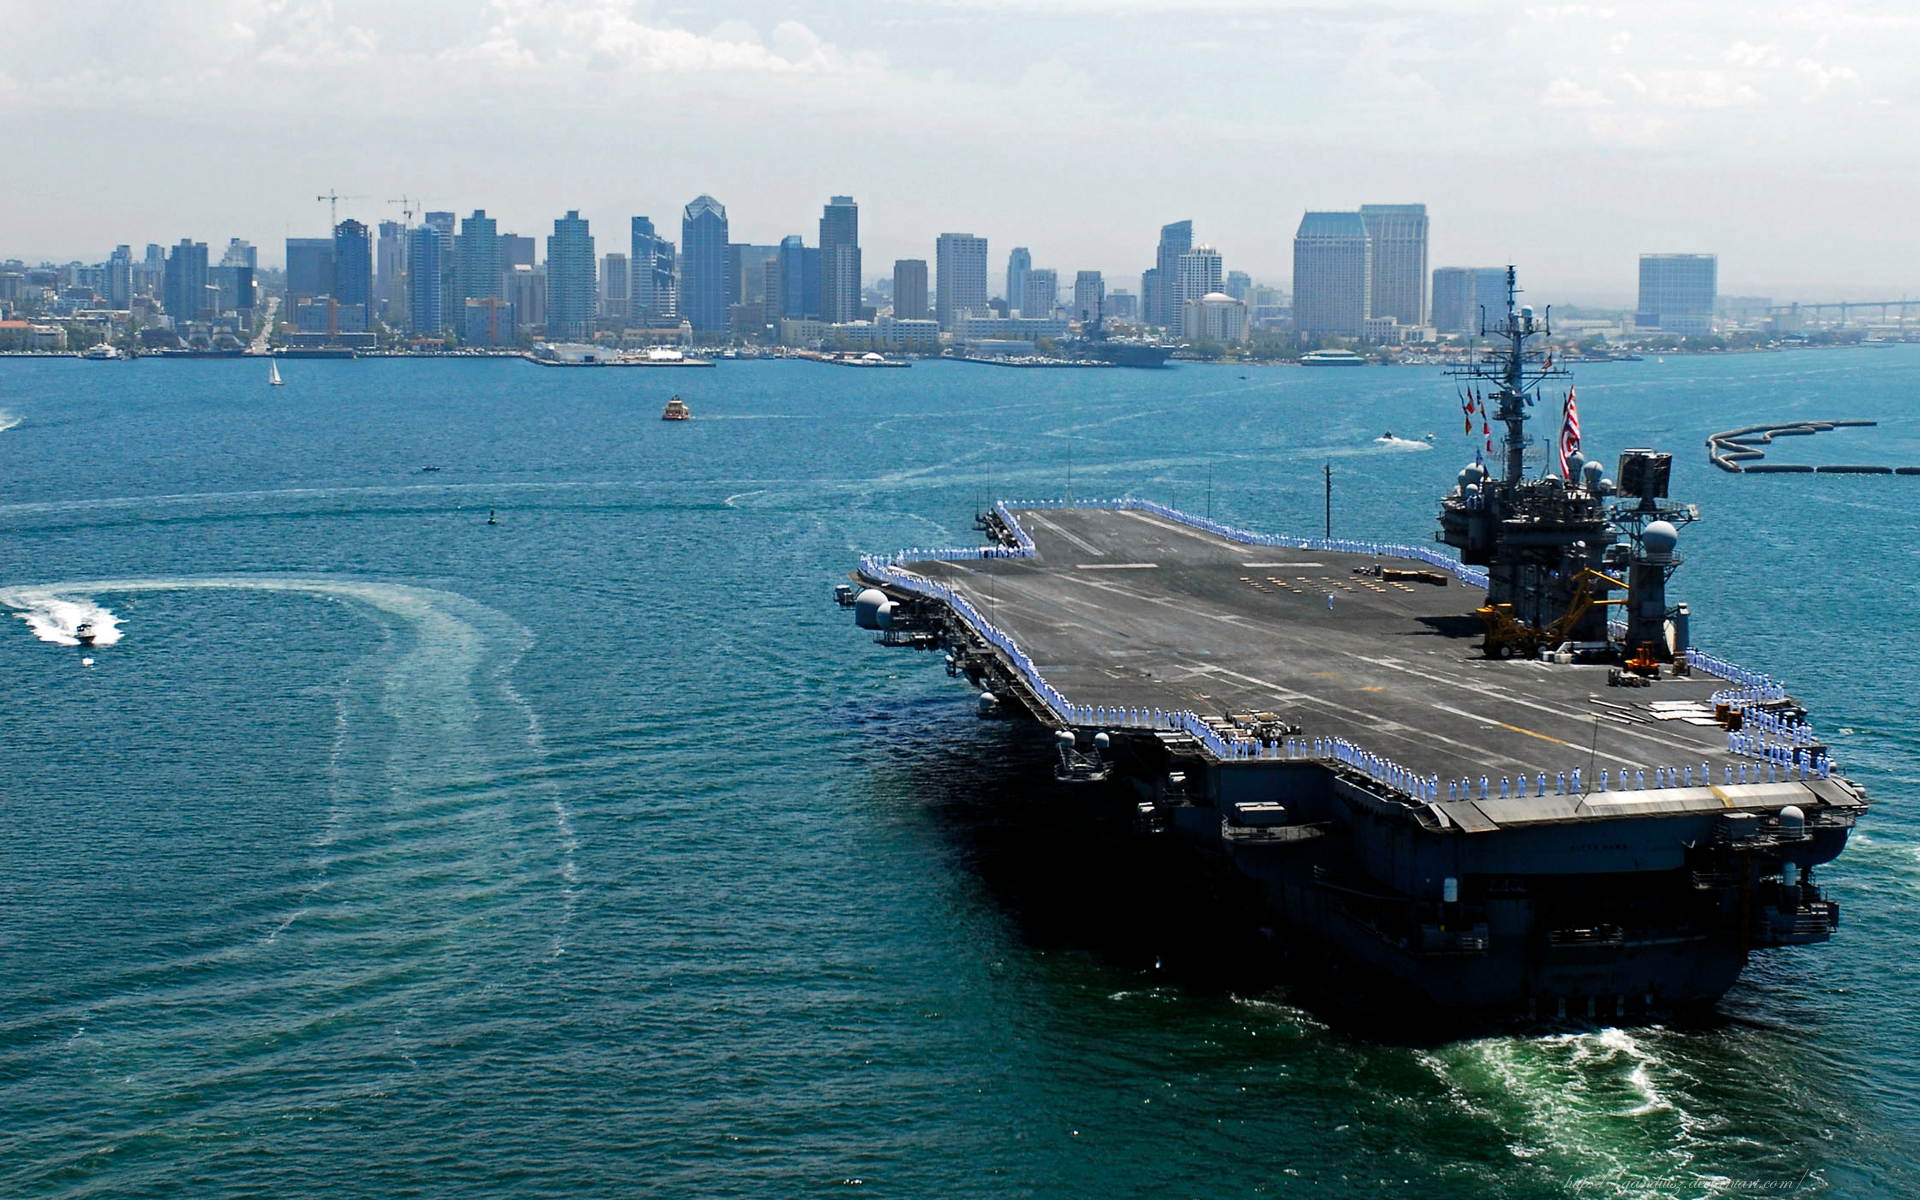 USS Kitty Hawk aircraft carrier sailing through the ocean on a clear day.